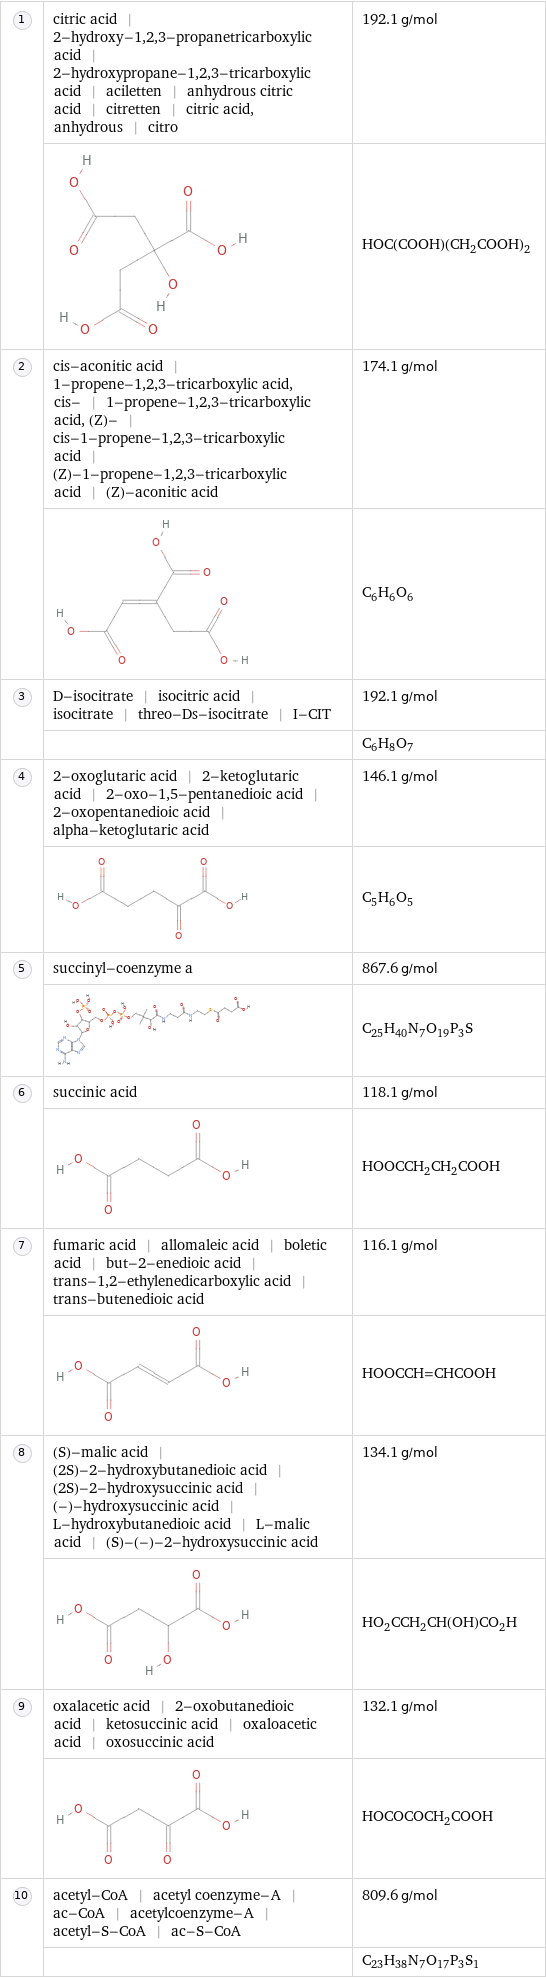  | citric acid | 2-hydroxy-1, 2, 3-propanetricarboxylic acid | 2-hydroxypropane-1, 2, 3-tricarboxylic acid | aciletten | anhydrous citric acid | citretten | citric acid, anhydrous | citro | 192.1 g/mol  | | HOC(COOH)(CH_2COOH)_2  | cis-aconitic acid | 1-propene-1, 2, 3-tricarboxylic acid, cis- | 1-propene-1, 2, 3-tricarboxylic acid, (Z)- | cis-1-propene-1, 2, 3-tricarboxylic acid | (Z)-1-propene-1, 2, 3-tricarboxylic acid | (Z)-aconitic acid | 174.1 g/mol  | | C_6H_6O_6  | D-isocitrate | isocitric acid | isocitrate | threo-Ds-isocitrate | I-CIT | 192.1 g/mol  | | C_6H_8O_7  | 2-oxoglutaric acid | 2-ketoglutaric acid | 2-oxo-1, 5-pentanedioic acid | 2-oxopentanedioic acid | alpha-ketoglutaric acid | 146.1 g/mol  | | C_5H_6O_5  | succinyl-coenzyme a | 867.6 g/mol  | | C_25H_40N_7O_19P_3S  | succinic acid | 118.1 g/mol  | | HOOCCH_2CH_2COOH  | fumaric acid | allomaleic acid | boletic acid | but-2-enedioic acid | trans-1, 2-ethylenedicarboxylic acid | trans-butenedioic acid | 116.1 g/mol  | | HOOCCH=CHCOOH  | (S)-malic acid | (2S)-2-hydroxybutanedioic acid | (2S)-2-hydroxysuccinic acid | (-)-hydroxysuccinic acid | L-hydroxybutanedioic acid | L-malic acid | (S)-(-)-2-hydroxysuccinic acid | 134.1 g/mol  | | HO_2CCH_2CH(OH)CO_2H  | oxalacetic acid | 2-oxobutanedioic acid | ketosuccinic acid | oxaloacetic acid | oxosuccinic acid | 132.1 g/mol  | | HOCOCOCH_2COOH  | acetyl-CoA | acetyl coenzyme-A | ac-CoA | acetylcoenzyme-A | acetyl-S-CoA | ac-S-CoA | 809.6 g/mol  | | C_23H_38N_7O_17P_3S_1